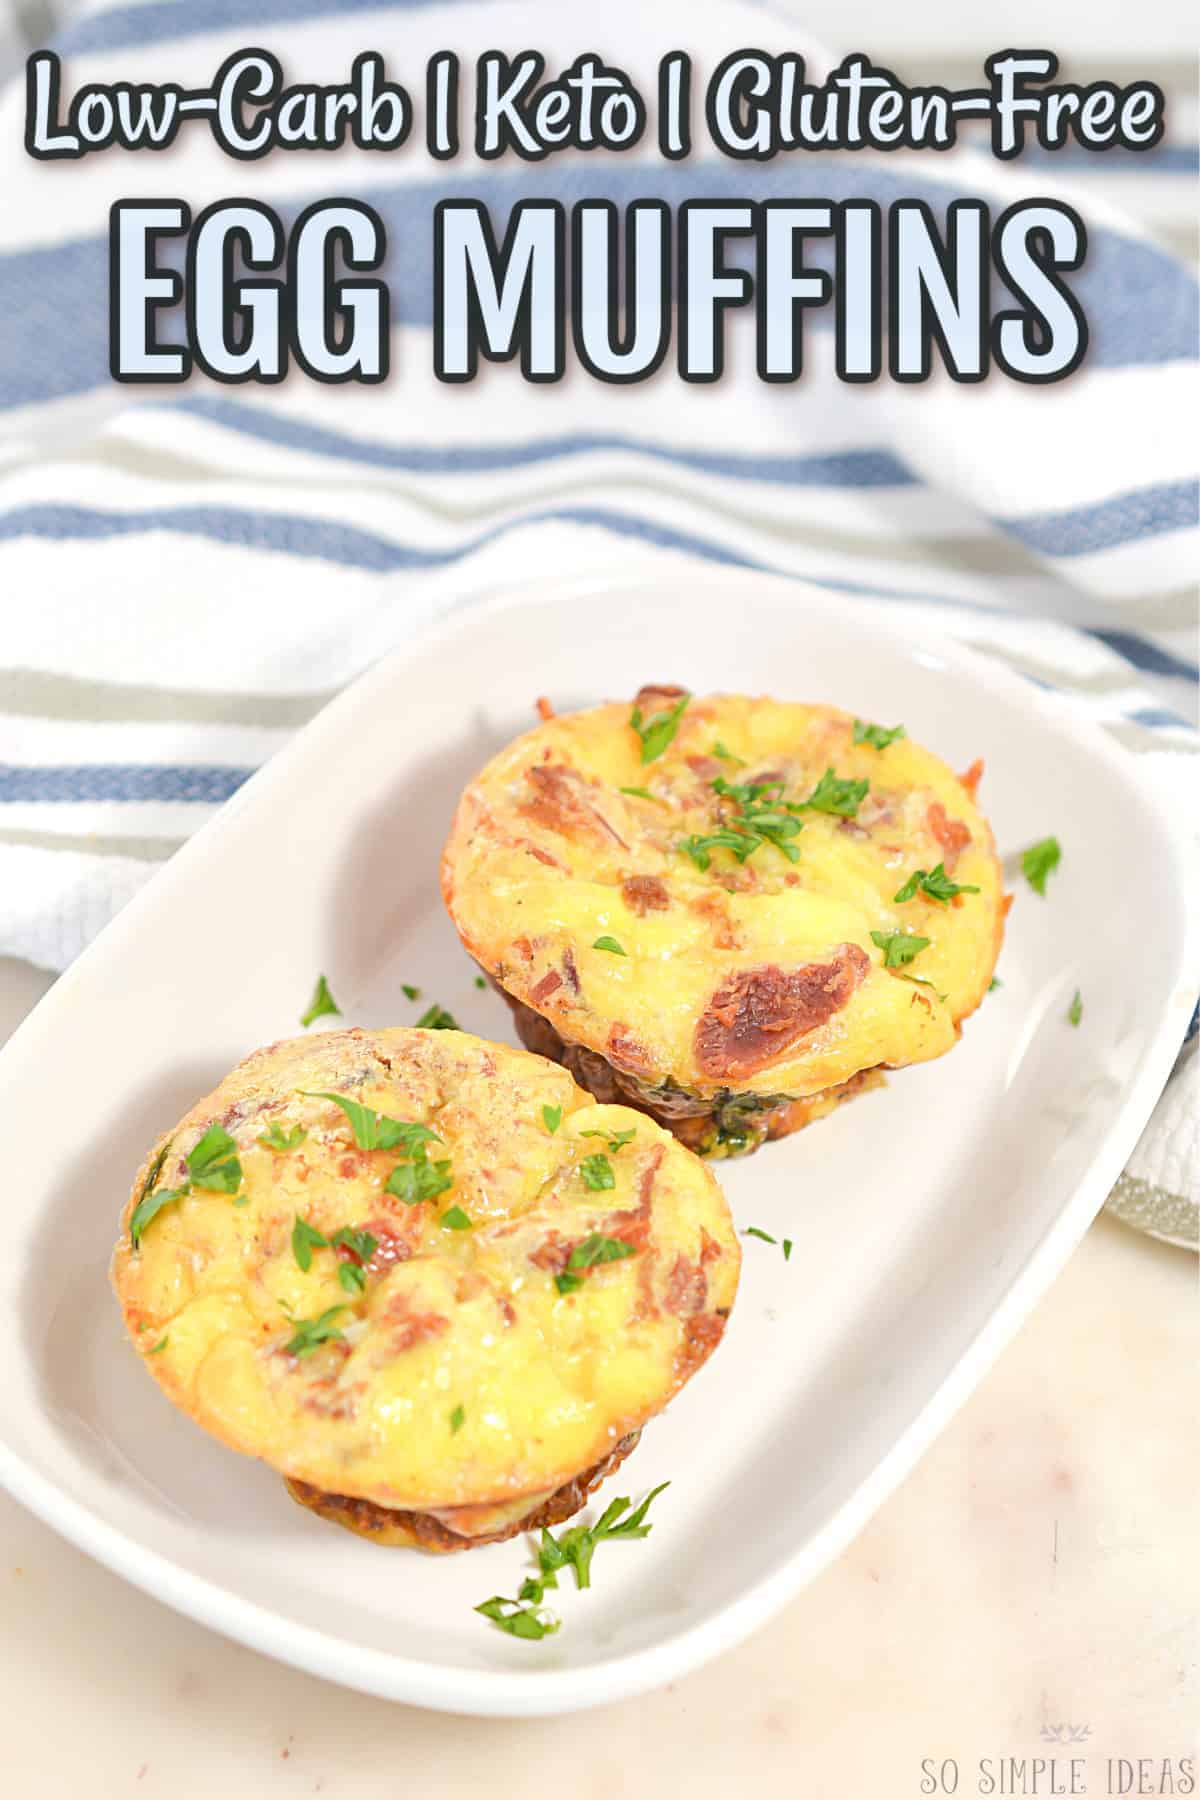 keto egg muffins cups recipe cover image